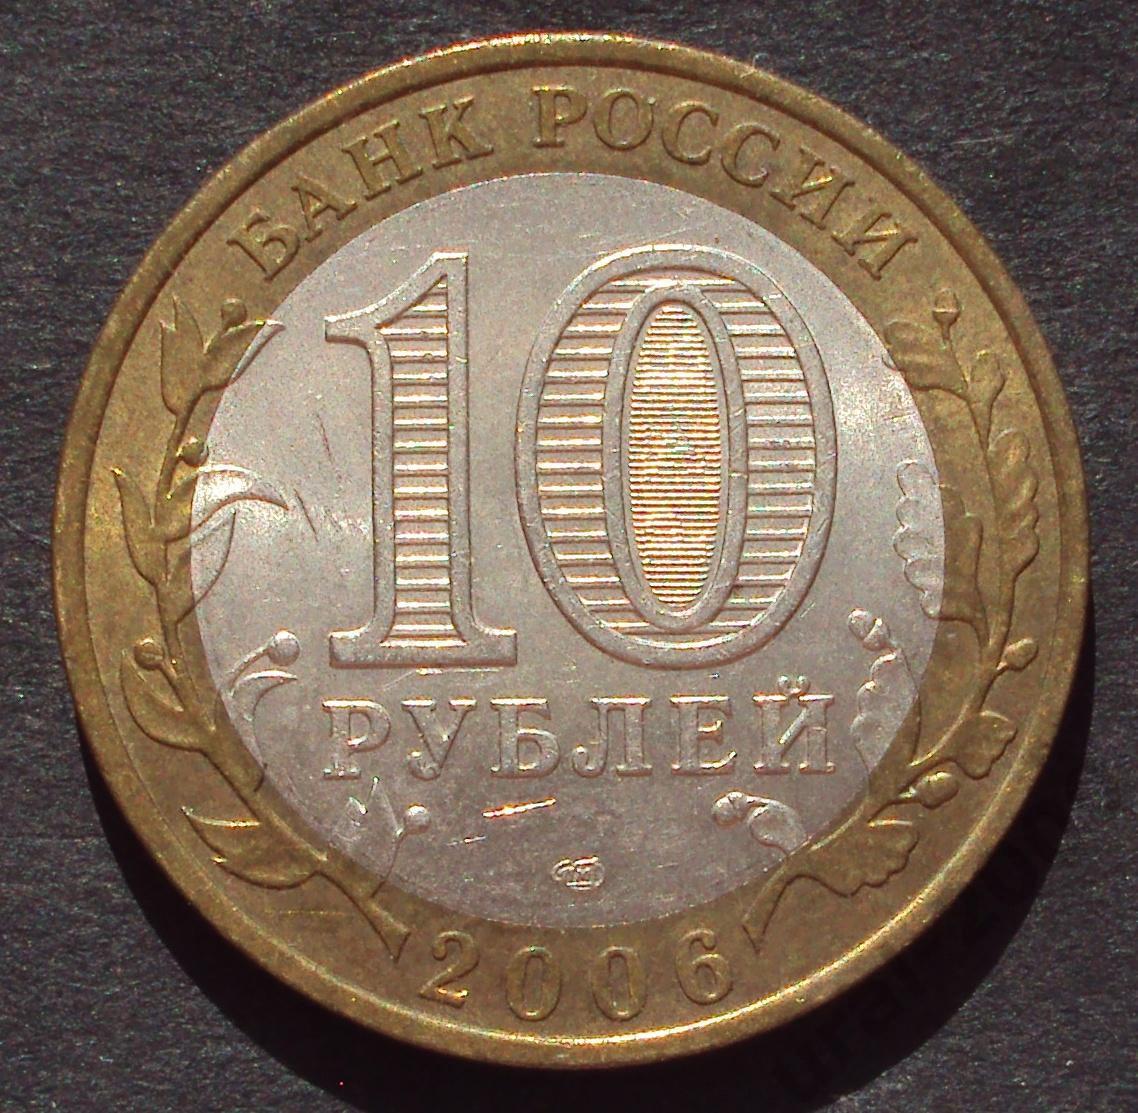 10 рублей 2006 год! Республика Алтай. СПМД. (А-36).